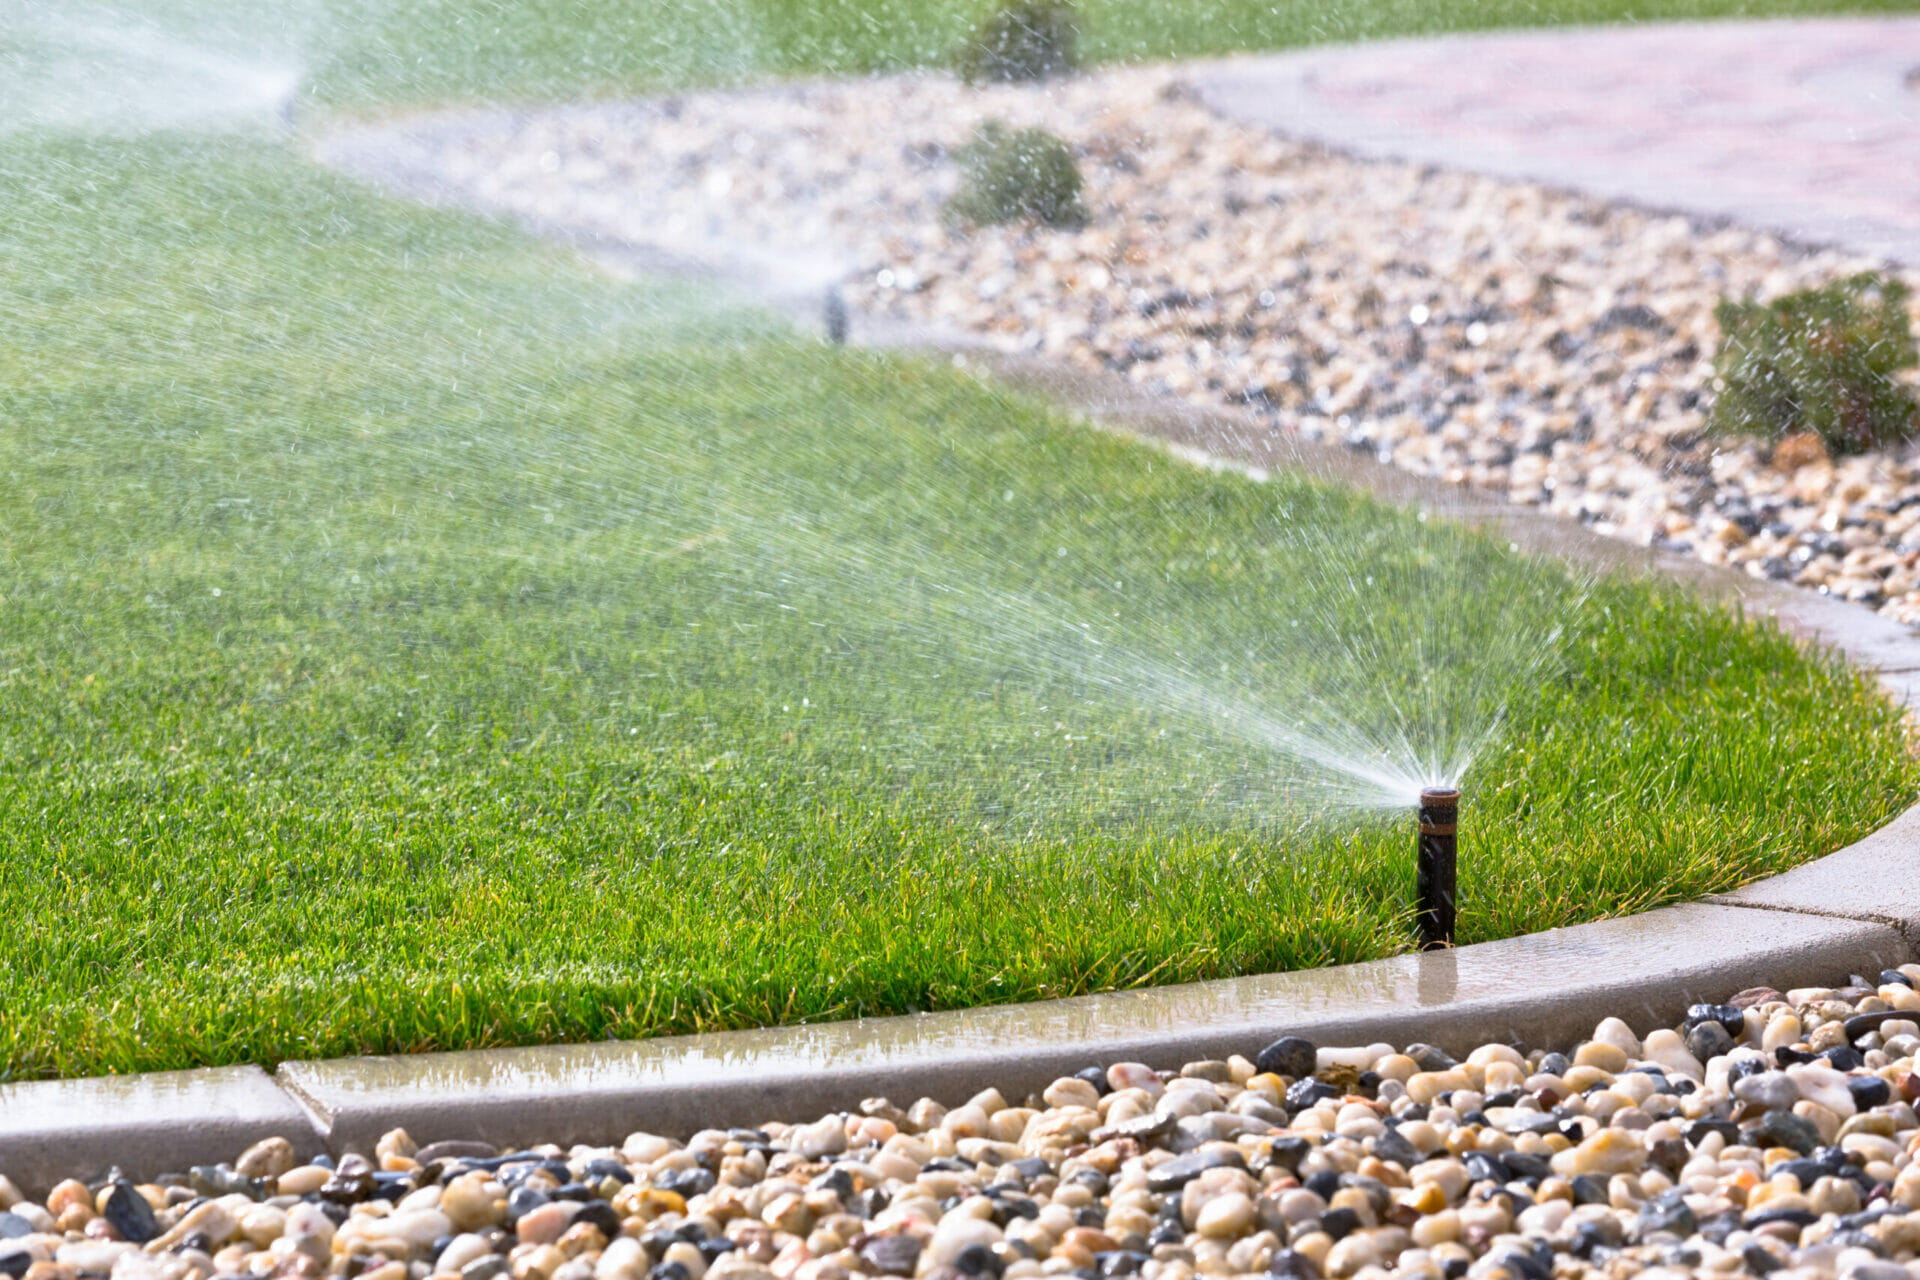 Sprinkler system watering the grass